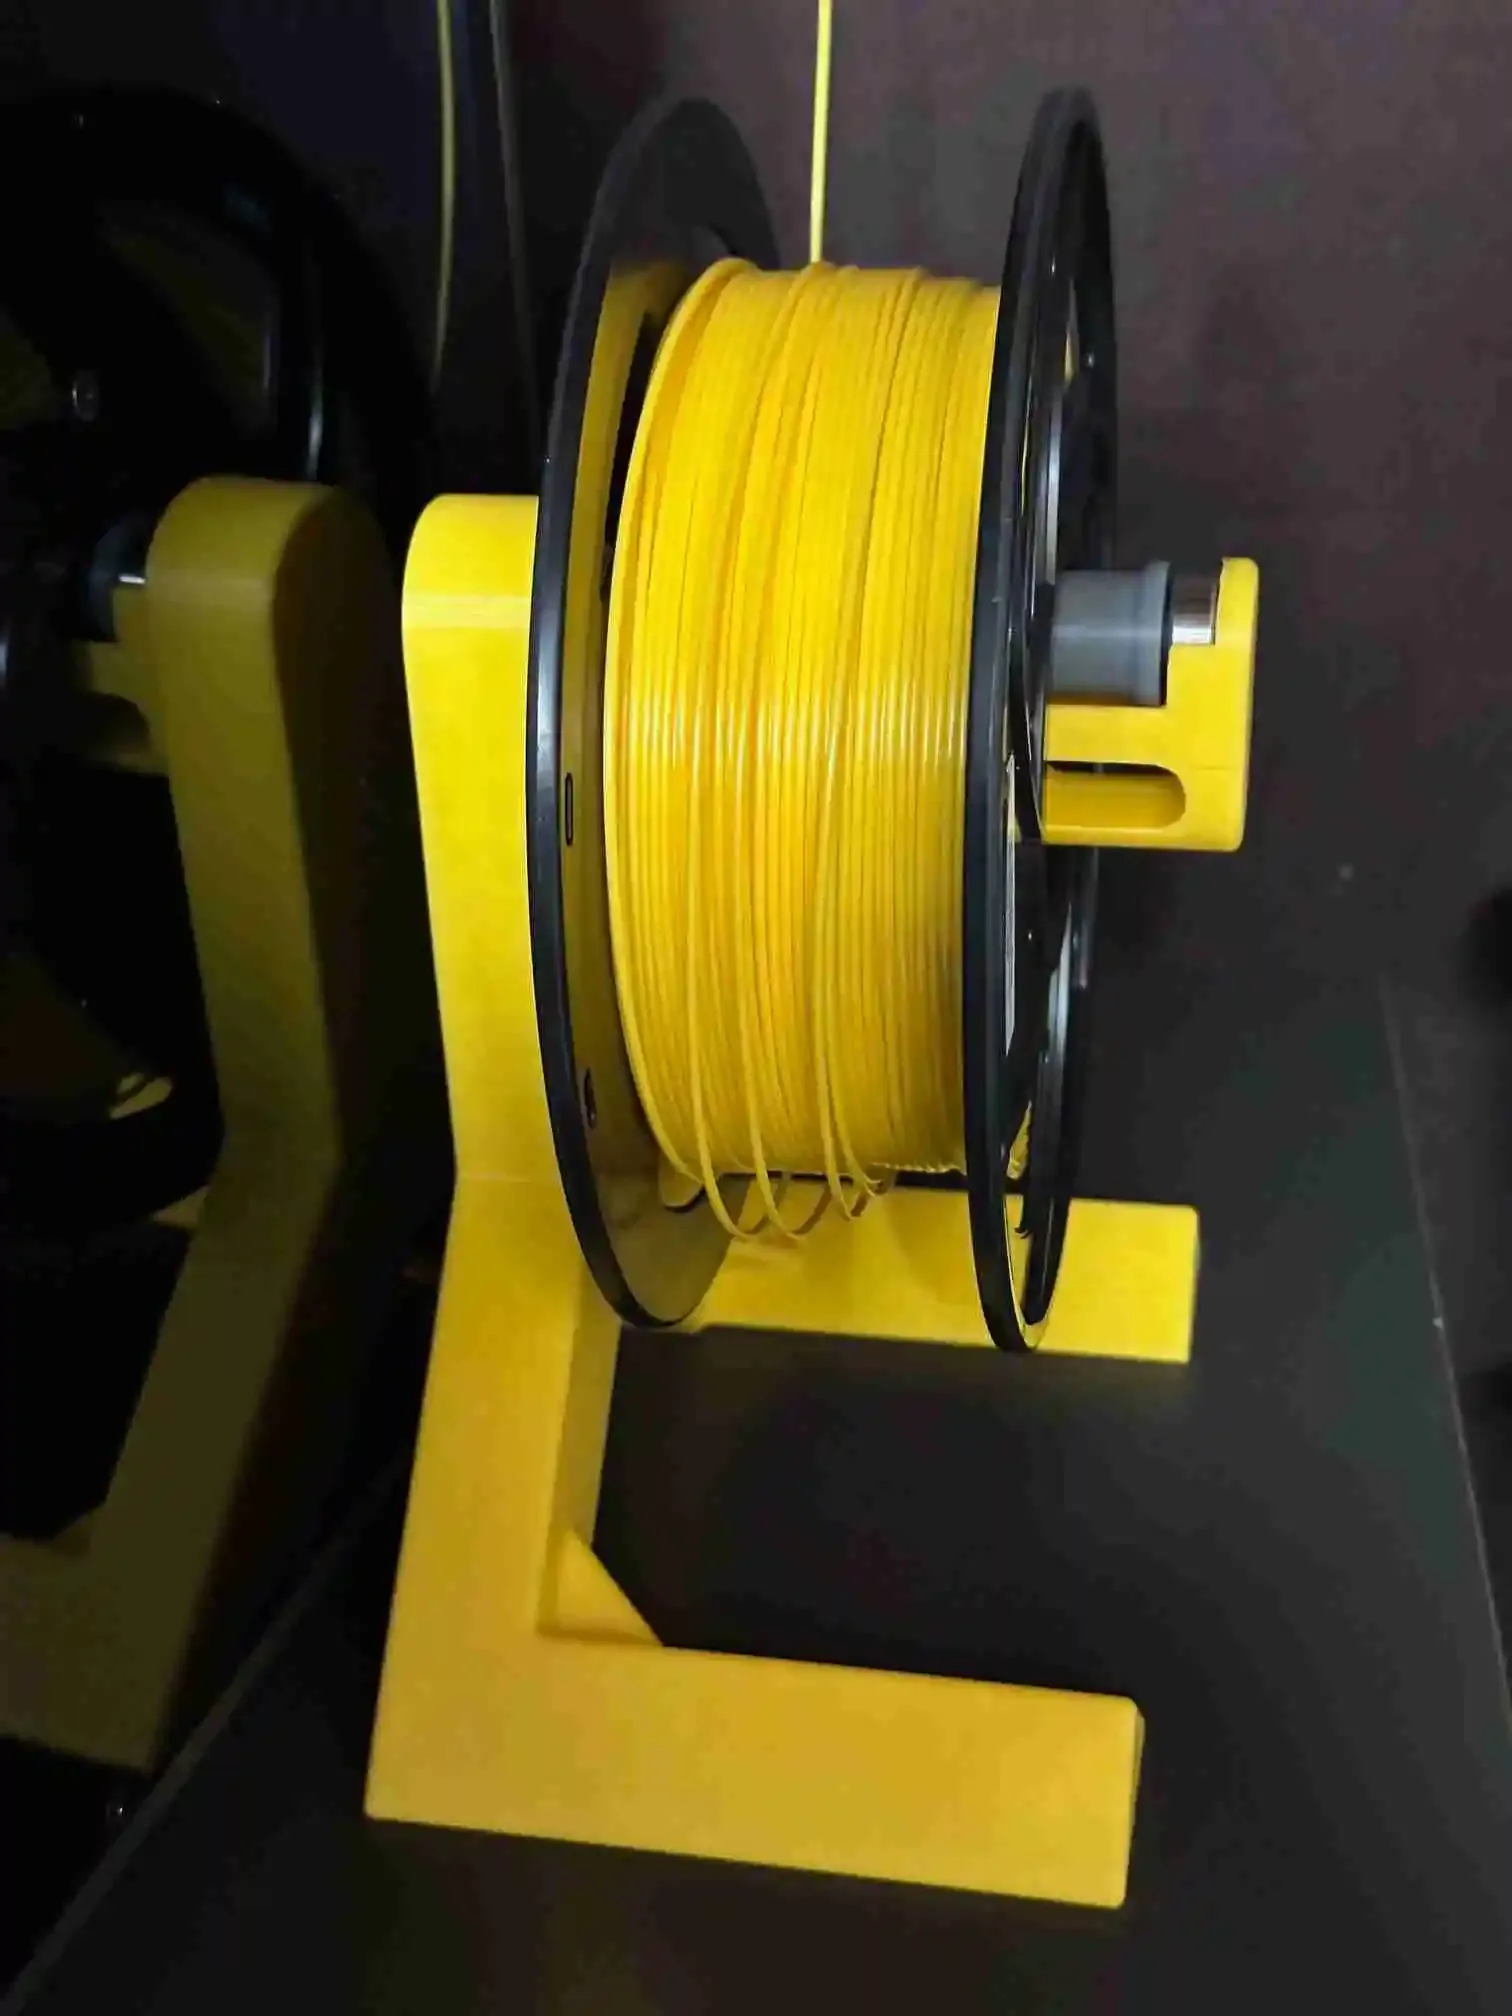 Spool Rack 3D Print File 